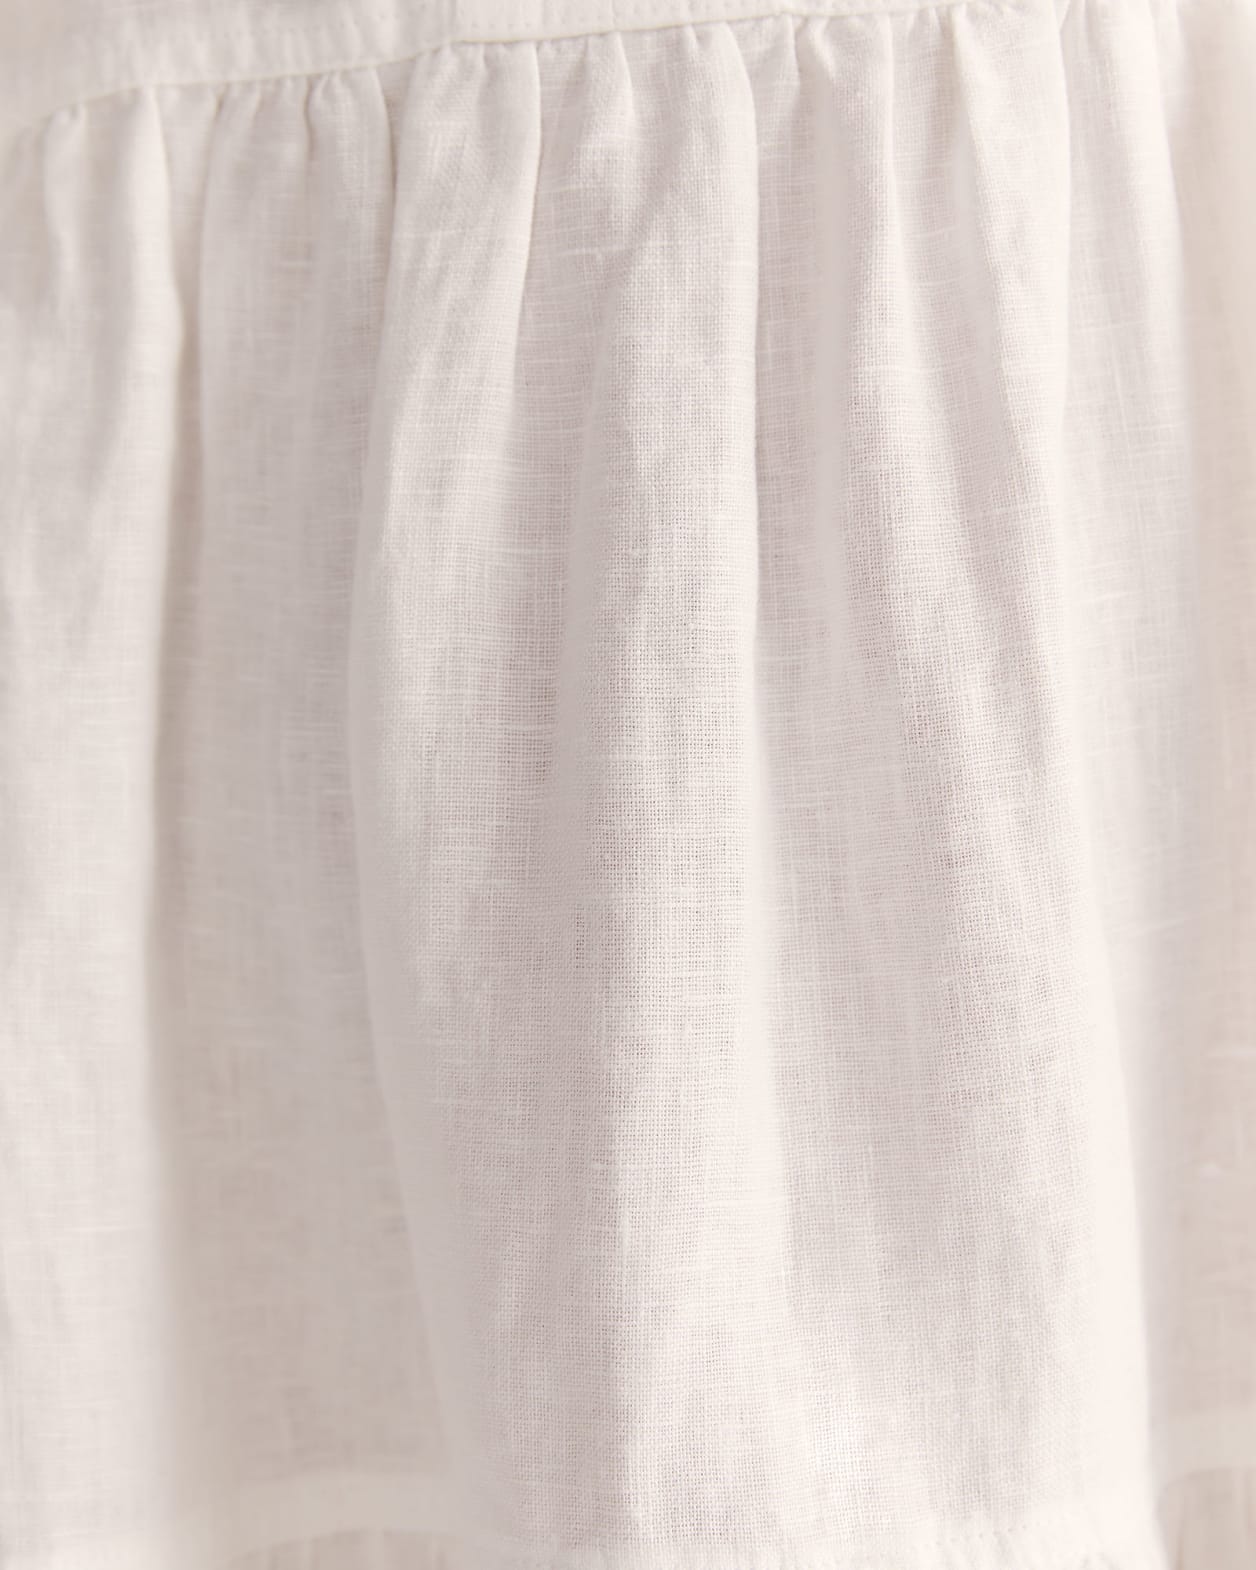 Lila Linen Tiered Mini Dress in WHITE